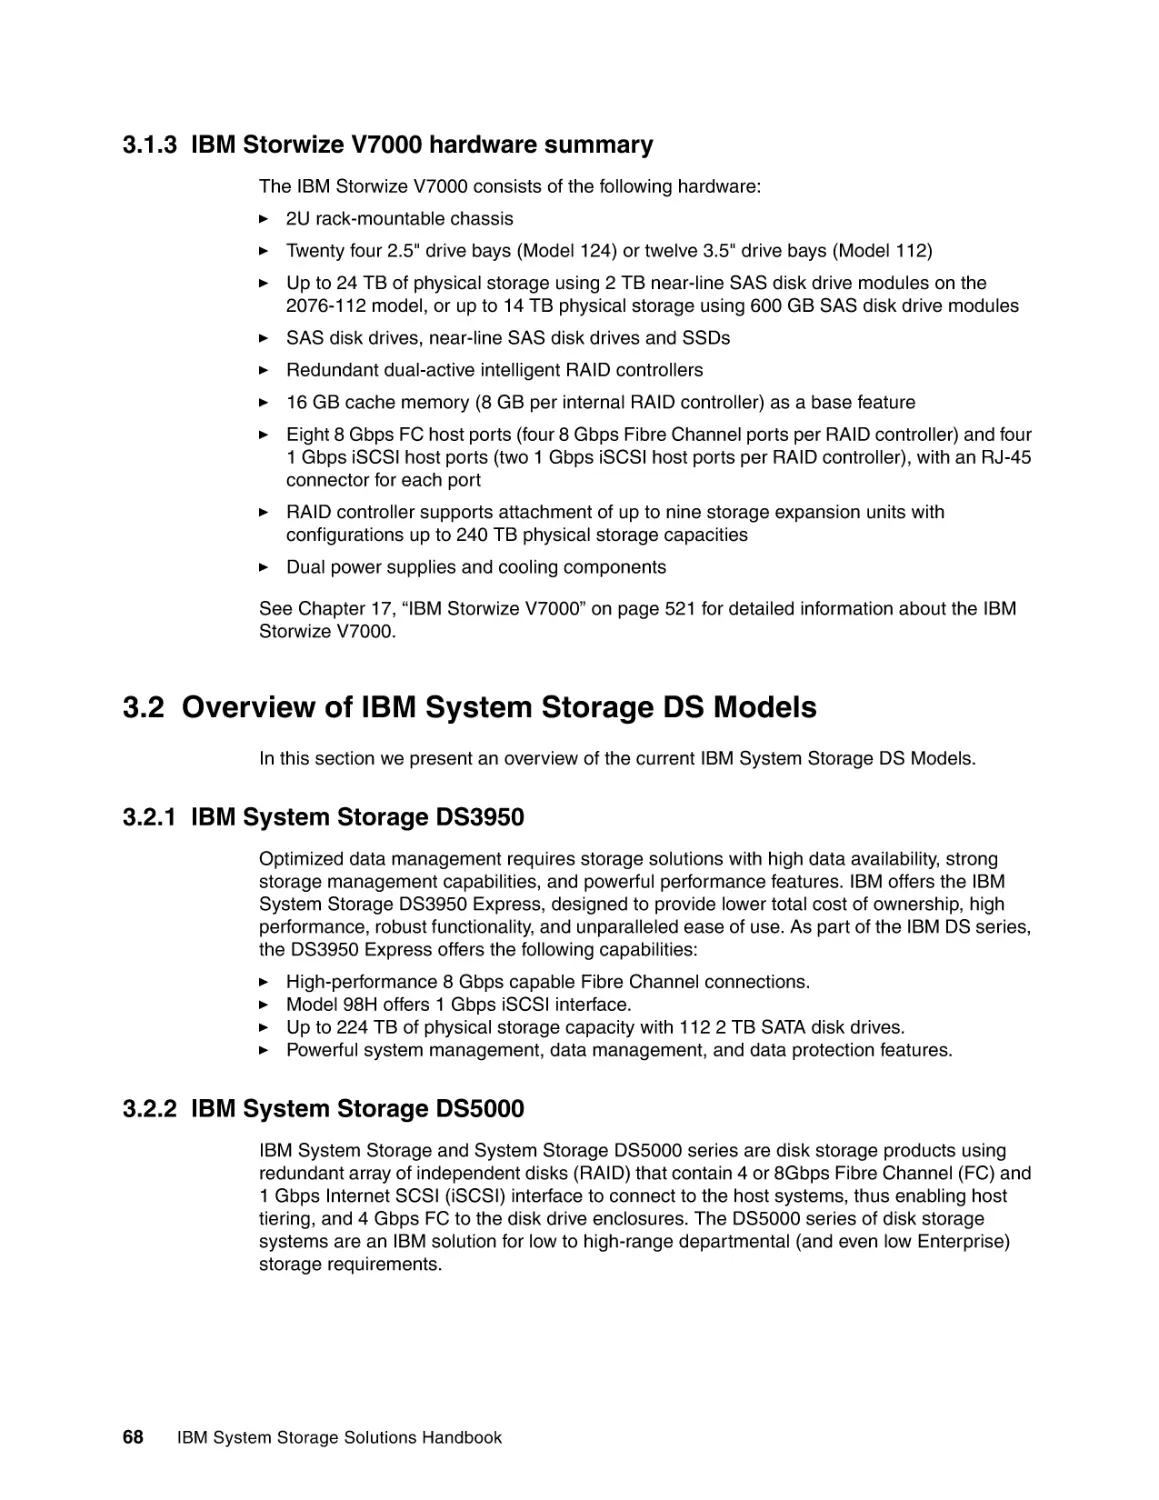 3.1.3 IBM Storwize V7000 hardware summary
3.2 Overview of IBM System Storage DS Models
3.2.1 IBM System Storage DS3950
3.2.2 IBM System Storage DS5000